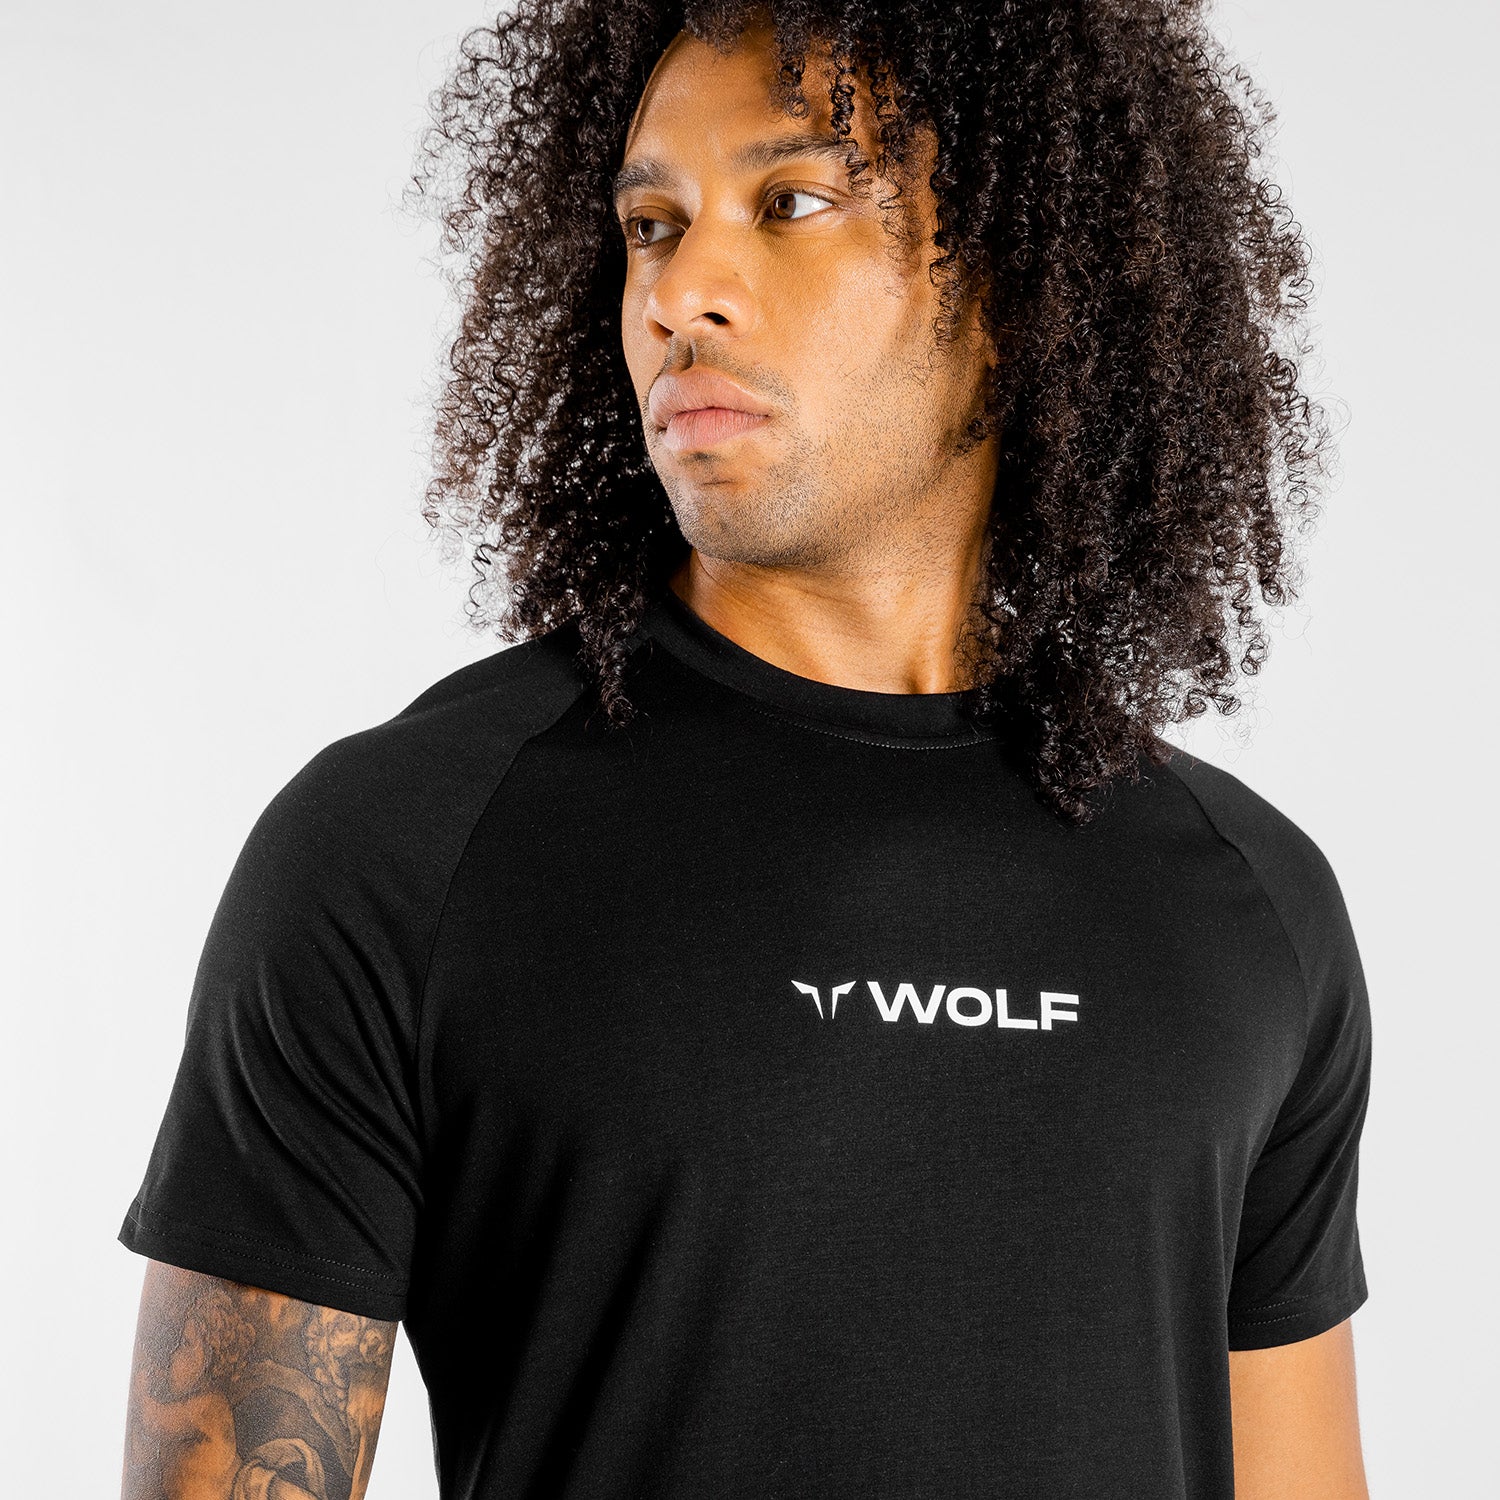 squatwolf-workout-shirts-for-men-primal-men-tee-black-gym-wear